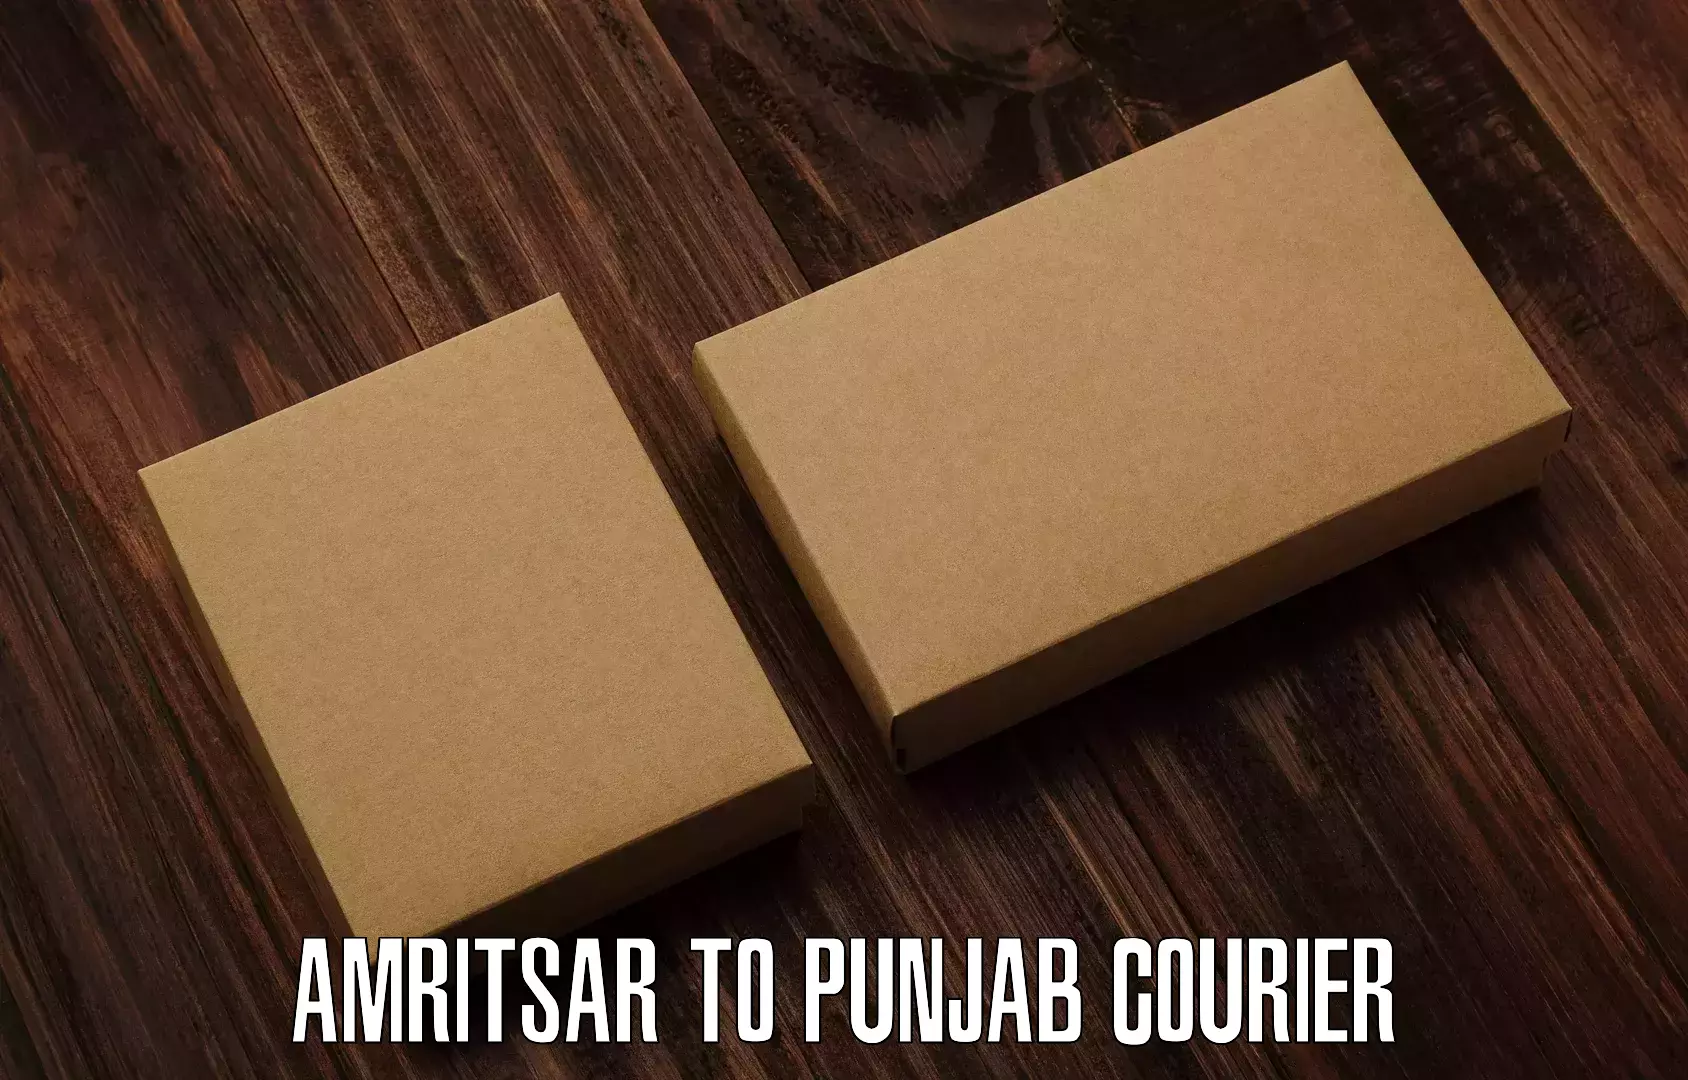 Express courier capabilities Amritsar to Ludhiana